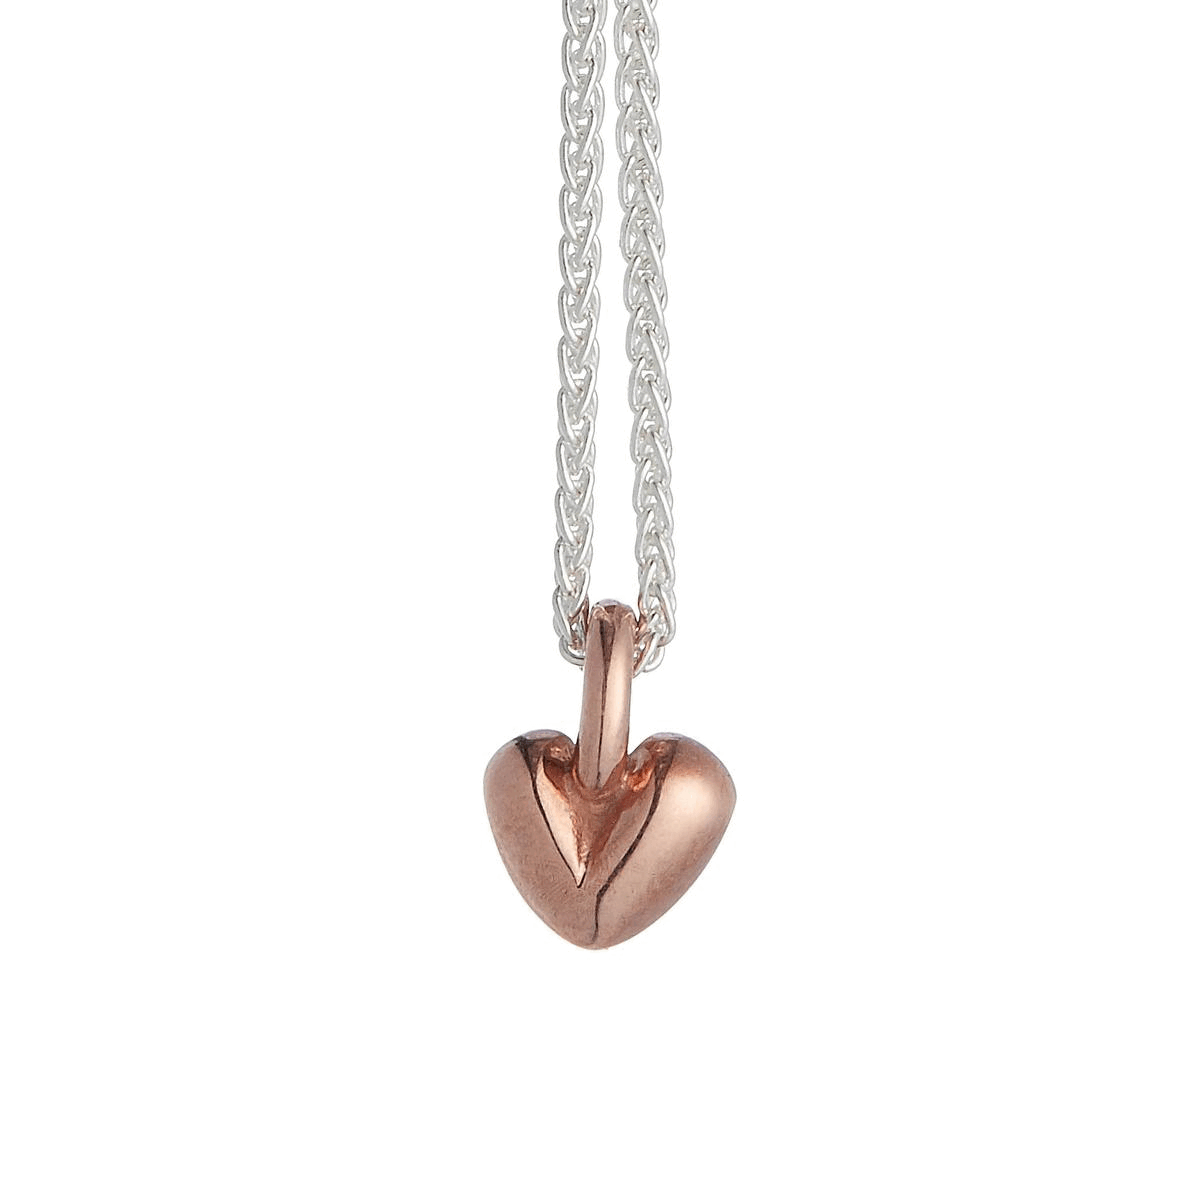 Recycled rose gold heart pendant Scarlett Jewellery UK Slow fashion jewellery trends